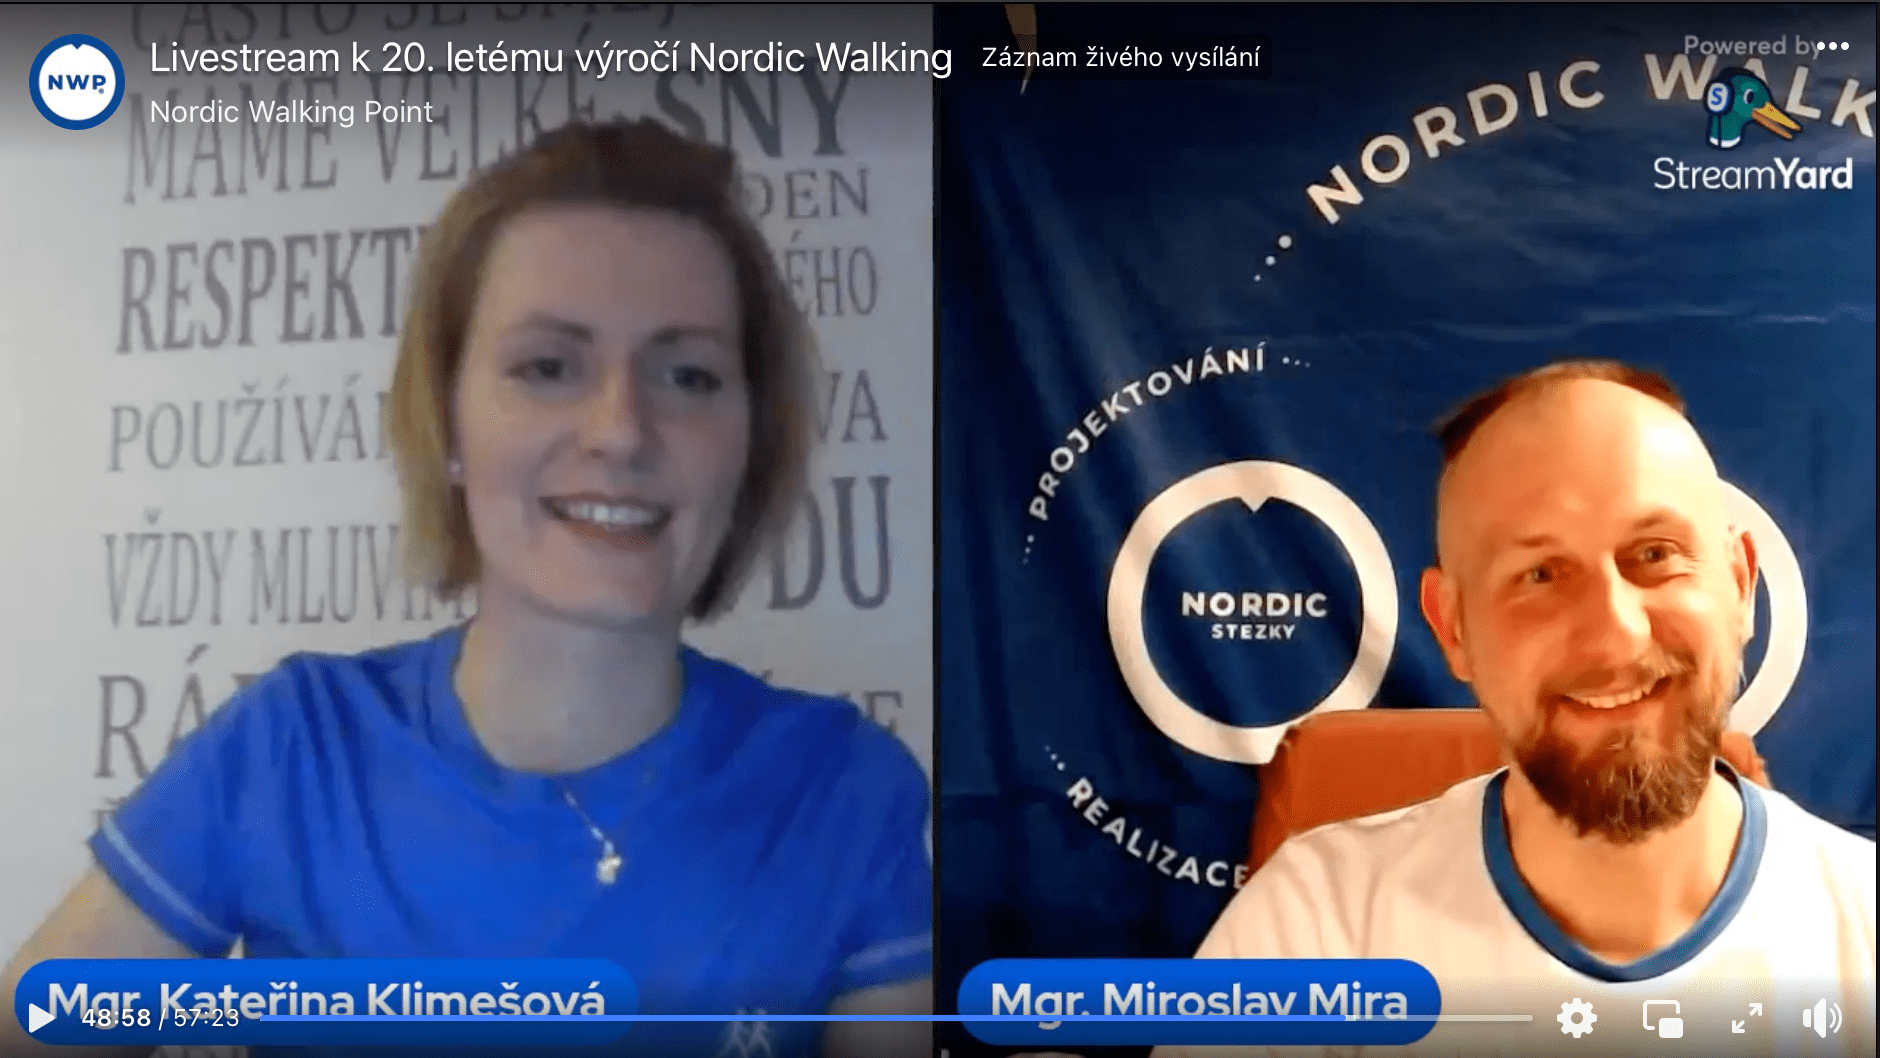 8x Live stream # 20 let Nordic walking Miroslava Miry